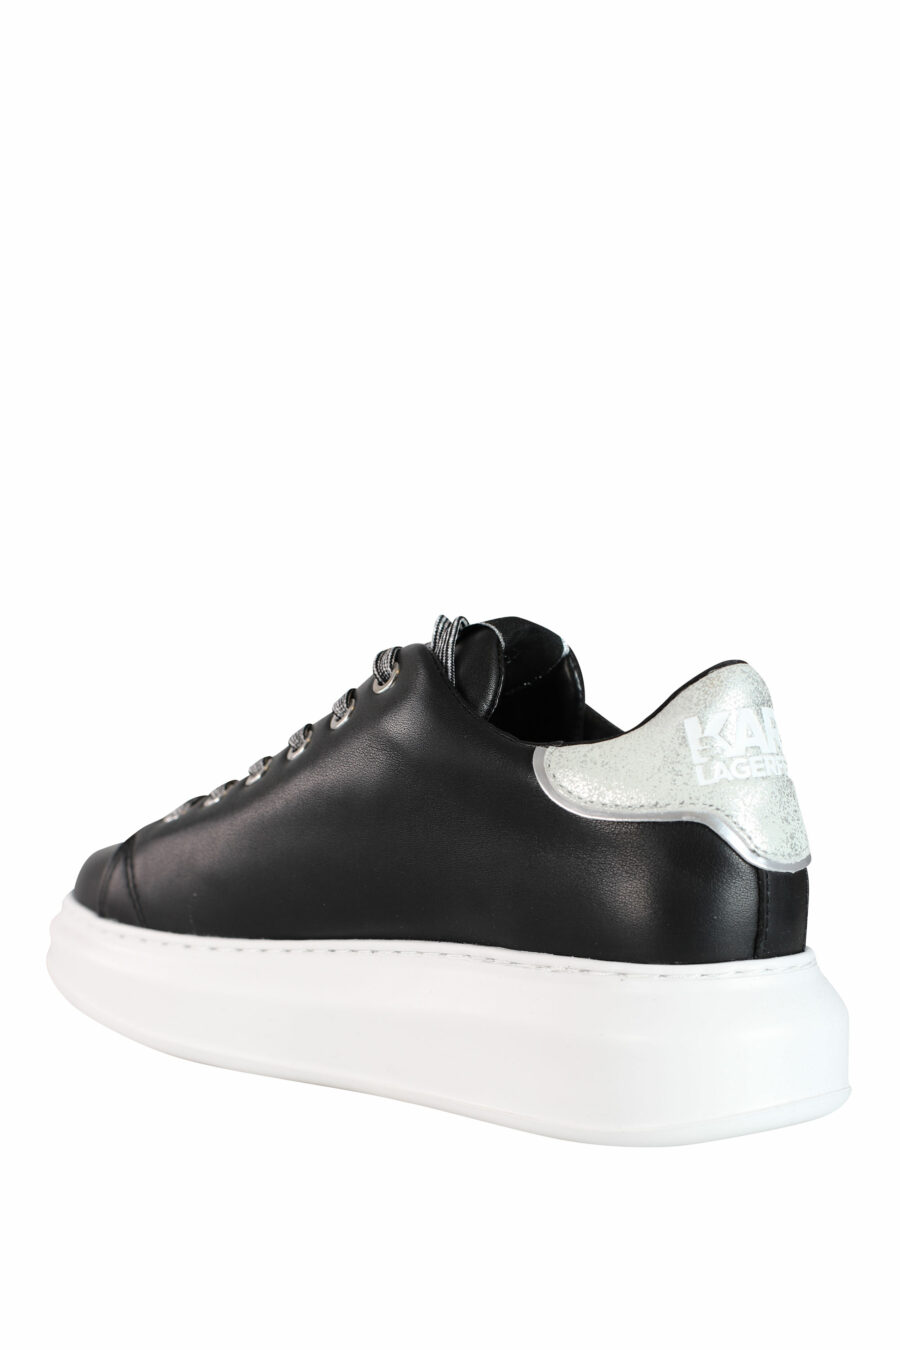 Zapatillas negras con detalles plateado y logo lettering "rue st guillaume" - IMG 3569